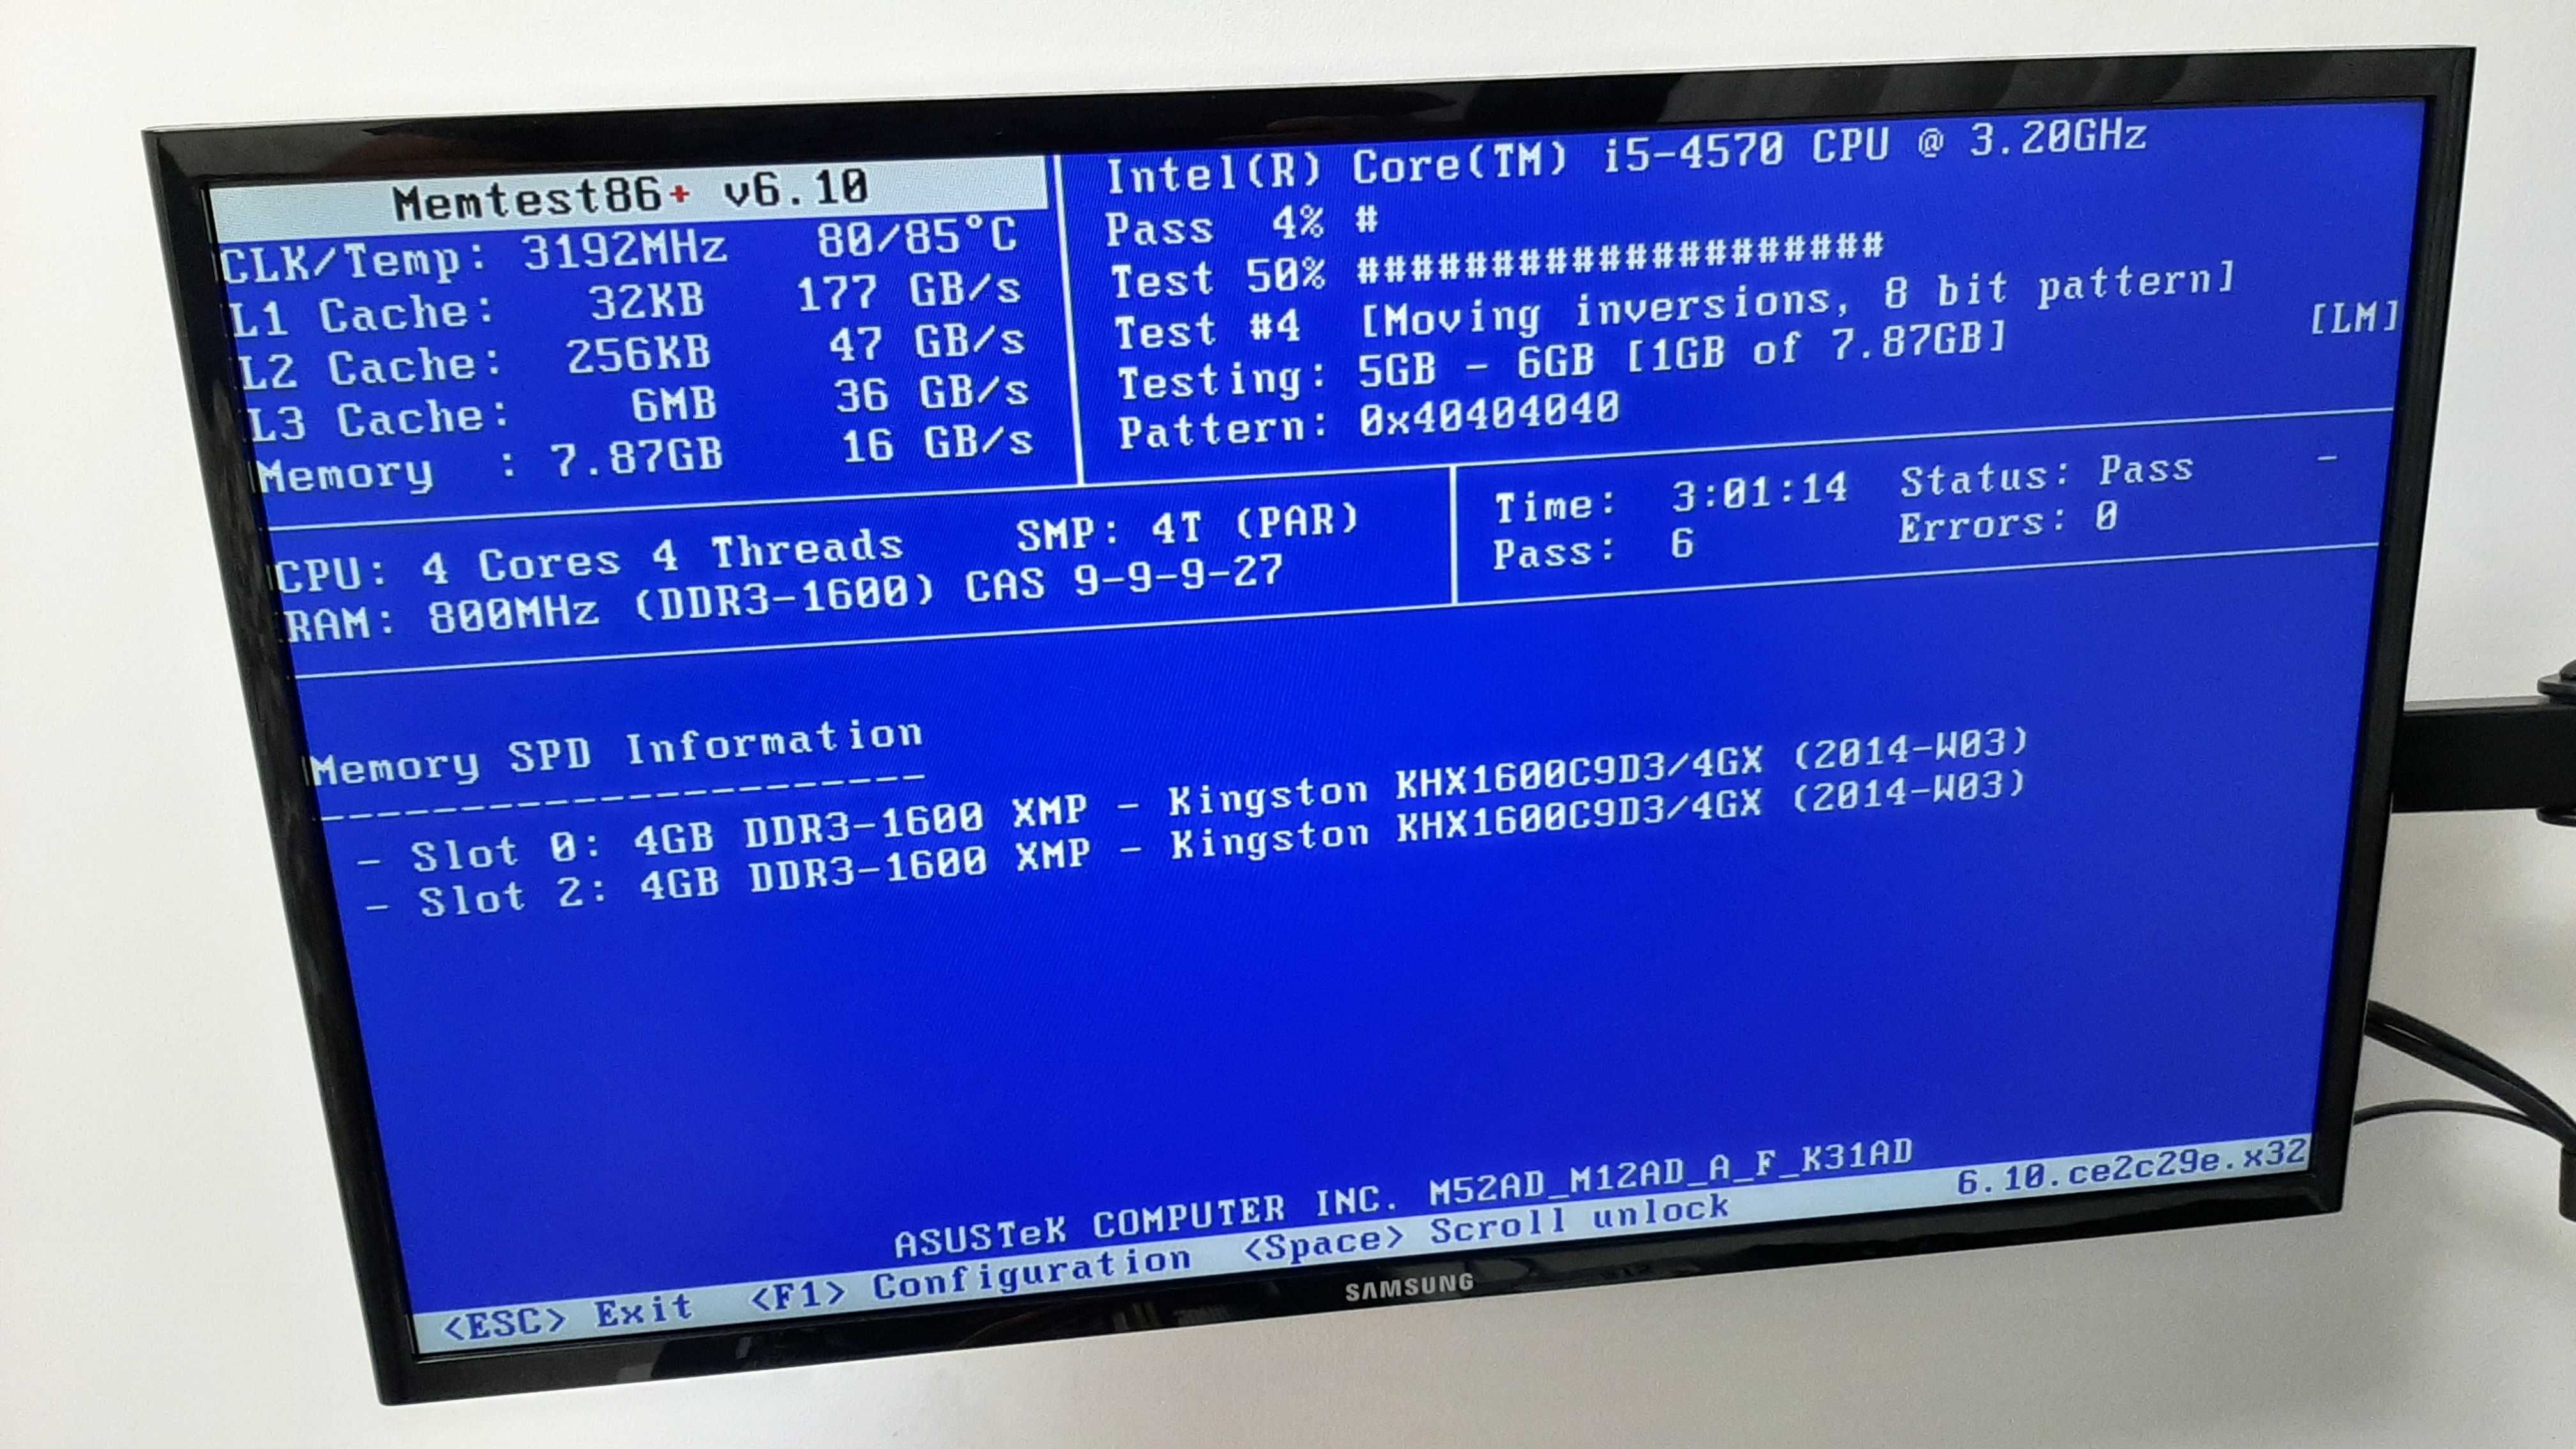 Kit memorii RAM PC 8Gb DDR3 1600Mhz(2x4Gb) Kingston HyperX Genesis